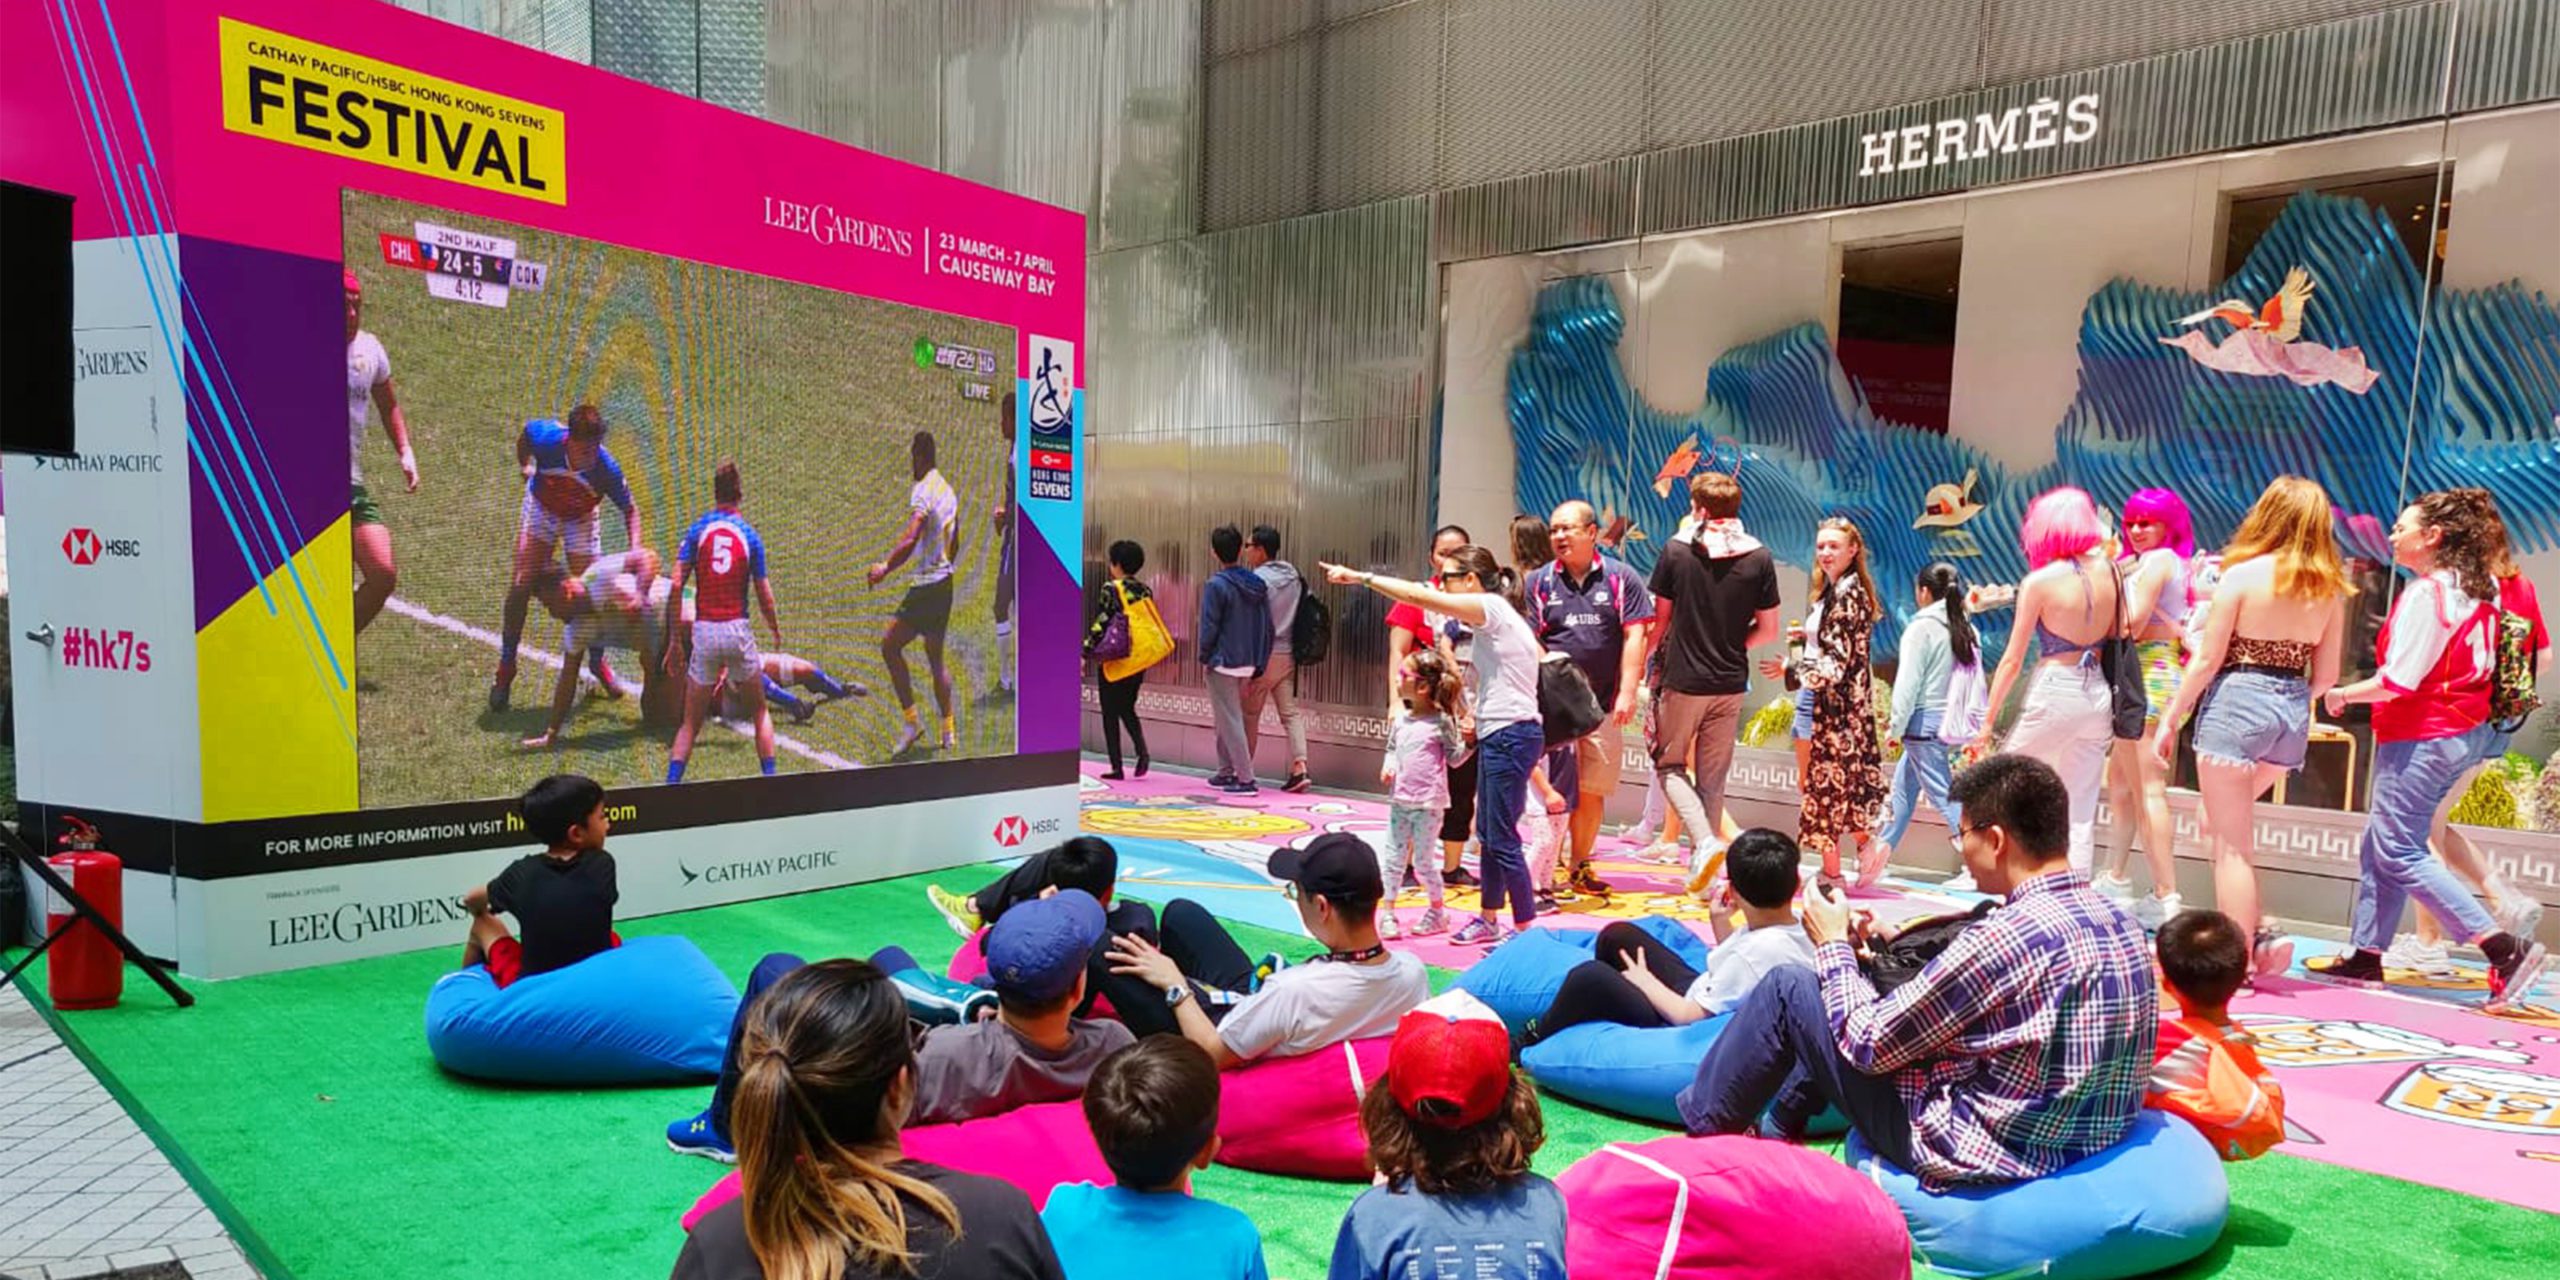 Hong Kong Sevens Festival Events Branding Marketing 2019 Outdoor Screens